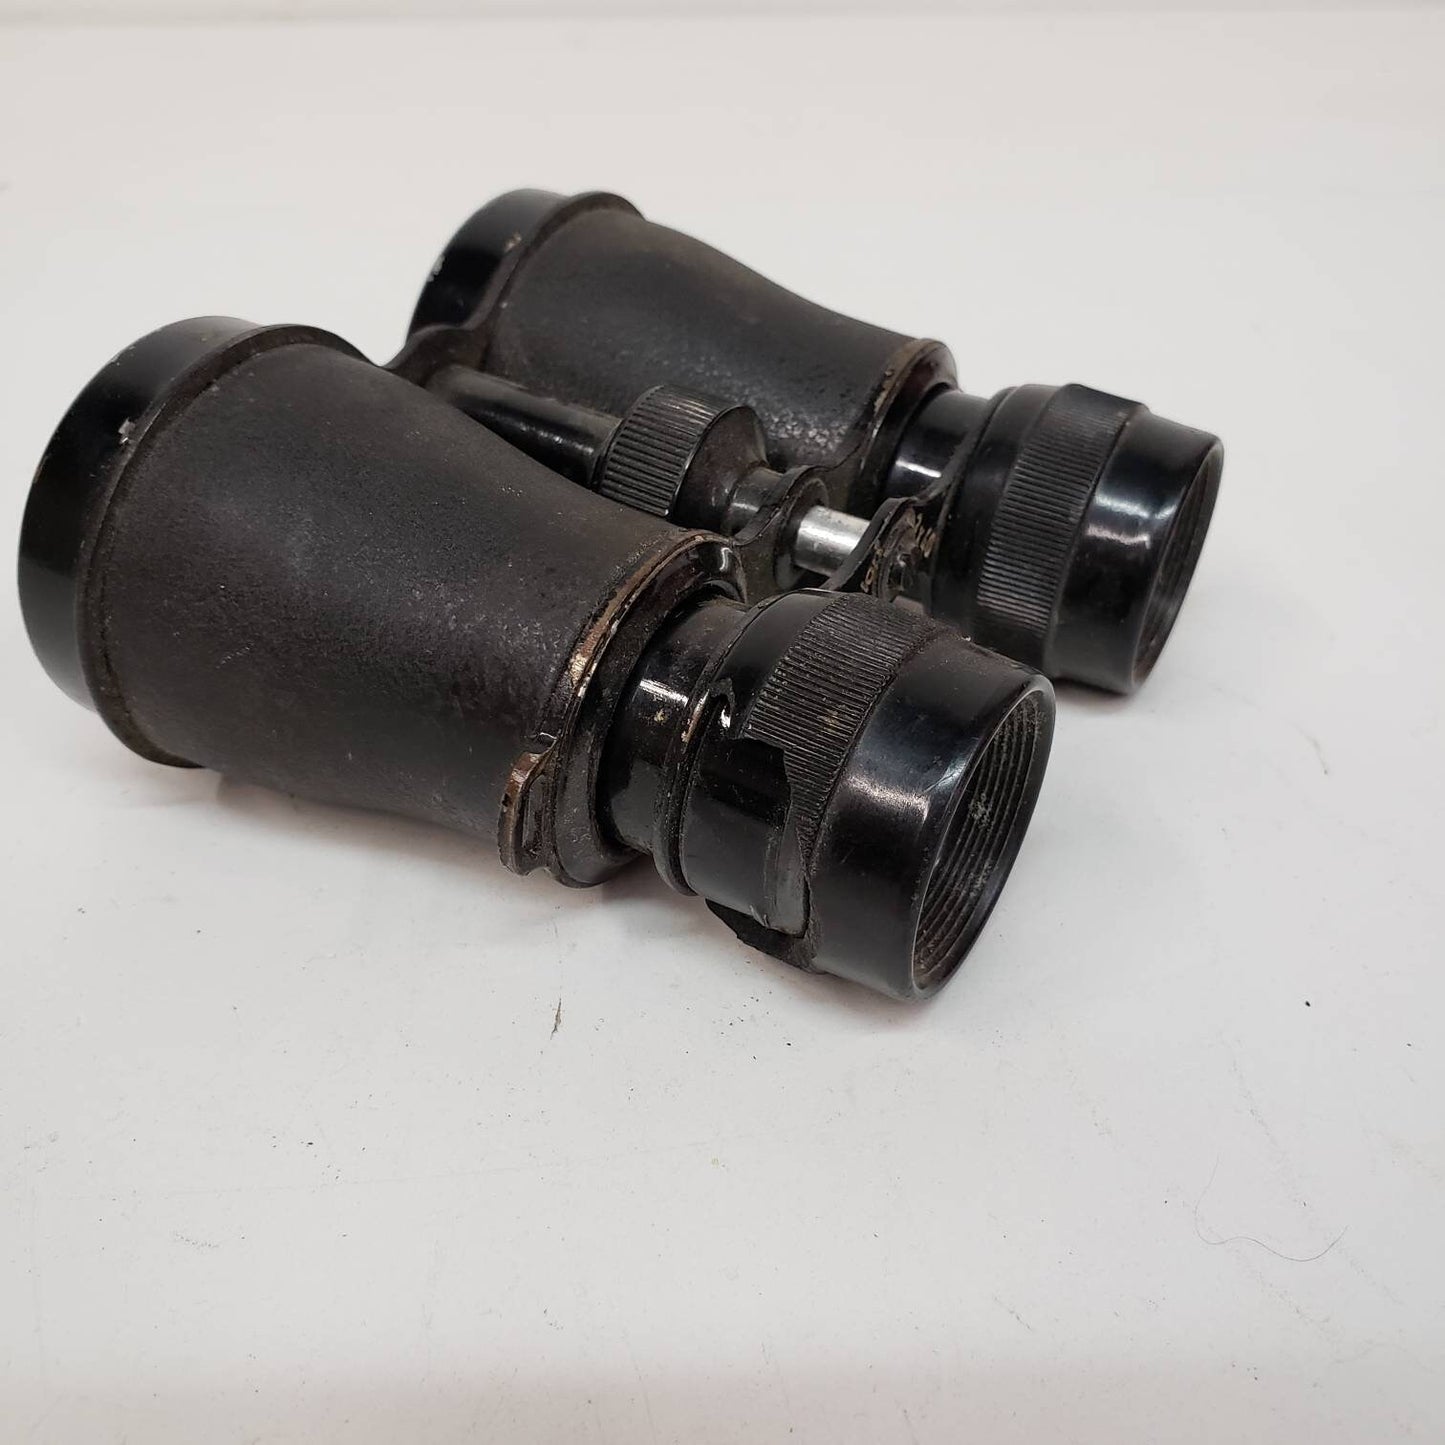 simplon binocular set made in germany 40x magnifying